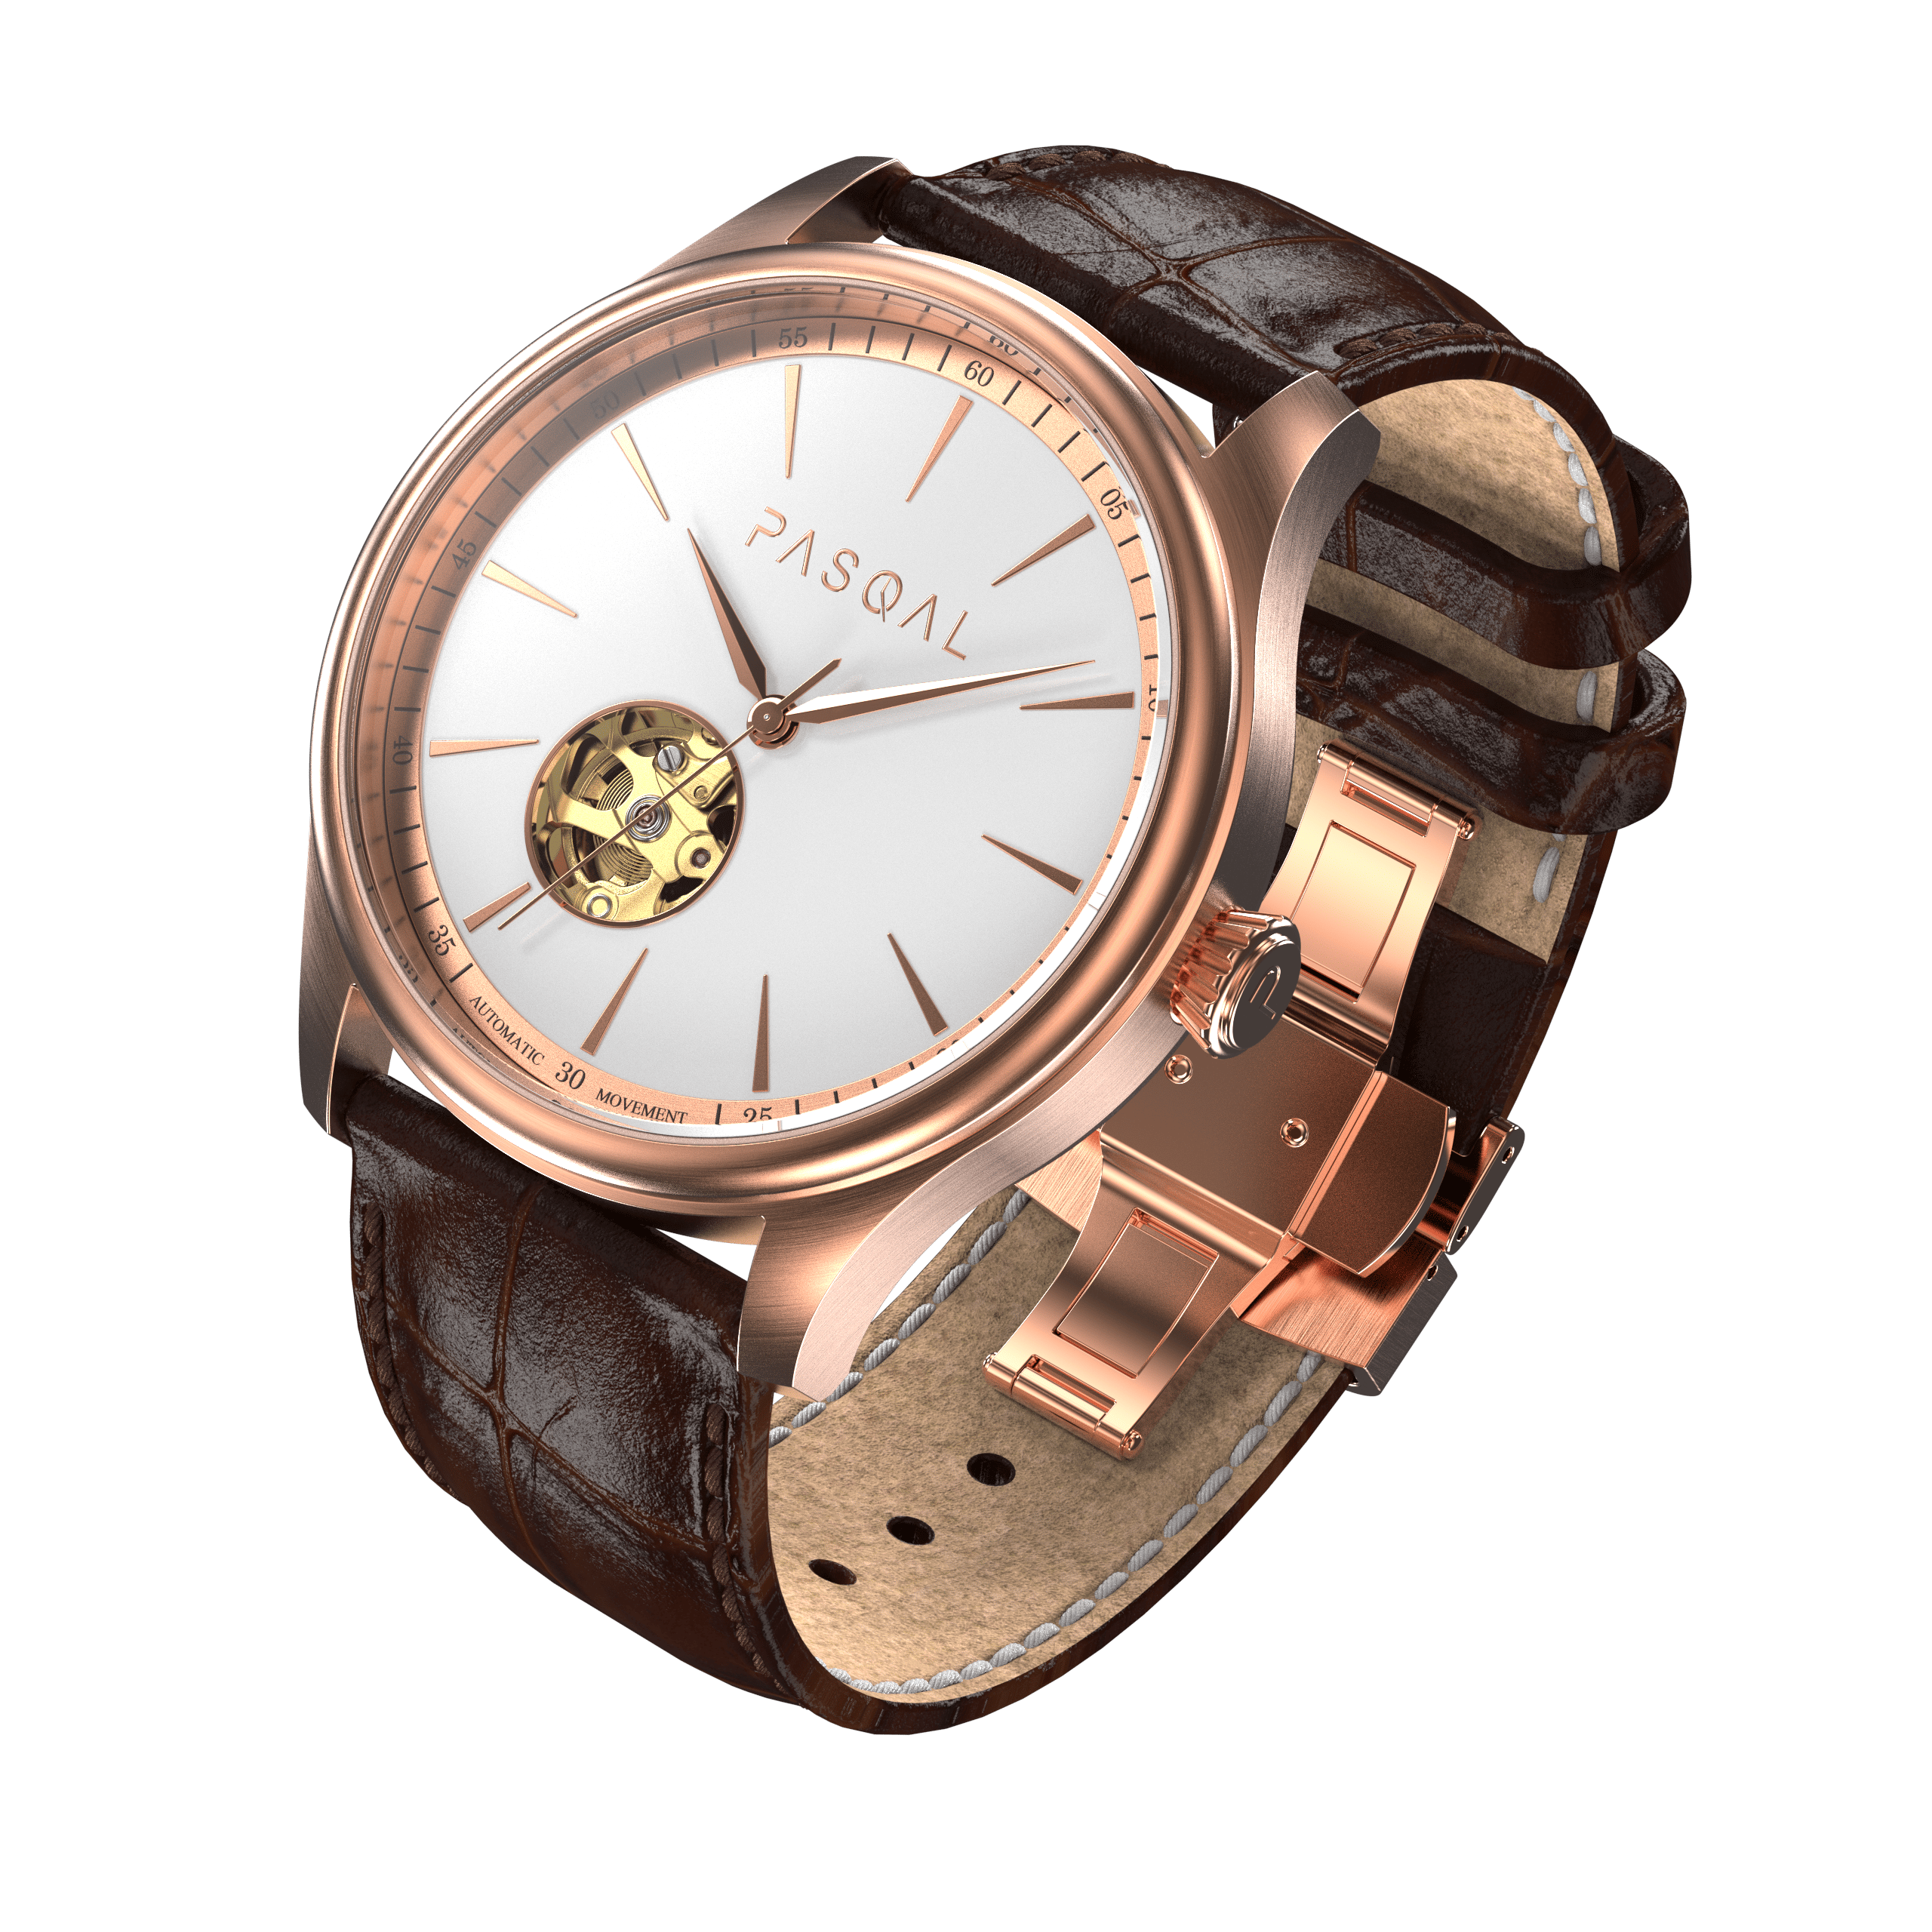 Wilhelm 42 Rosé/White - Pasqal Watches